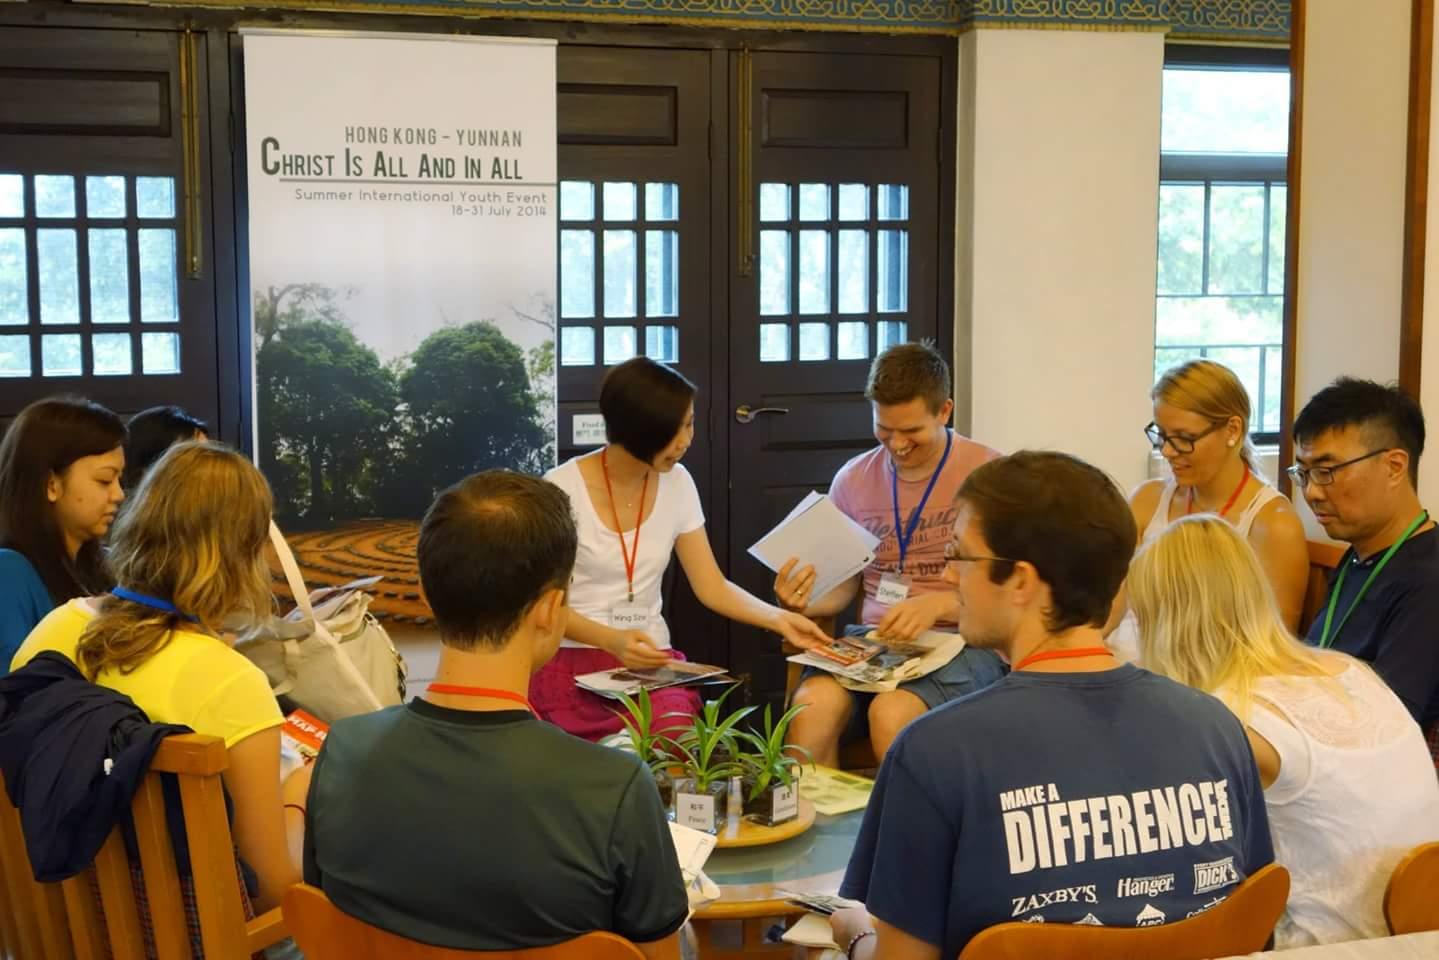 Youth event at Tao Fong Shan Christian Center, Hong Kong, in 2014. Credit: Dr Wing-sze Tong